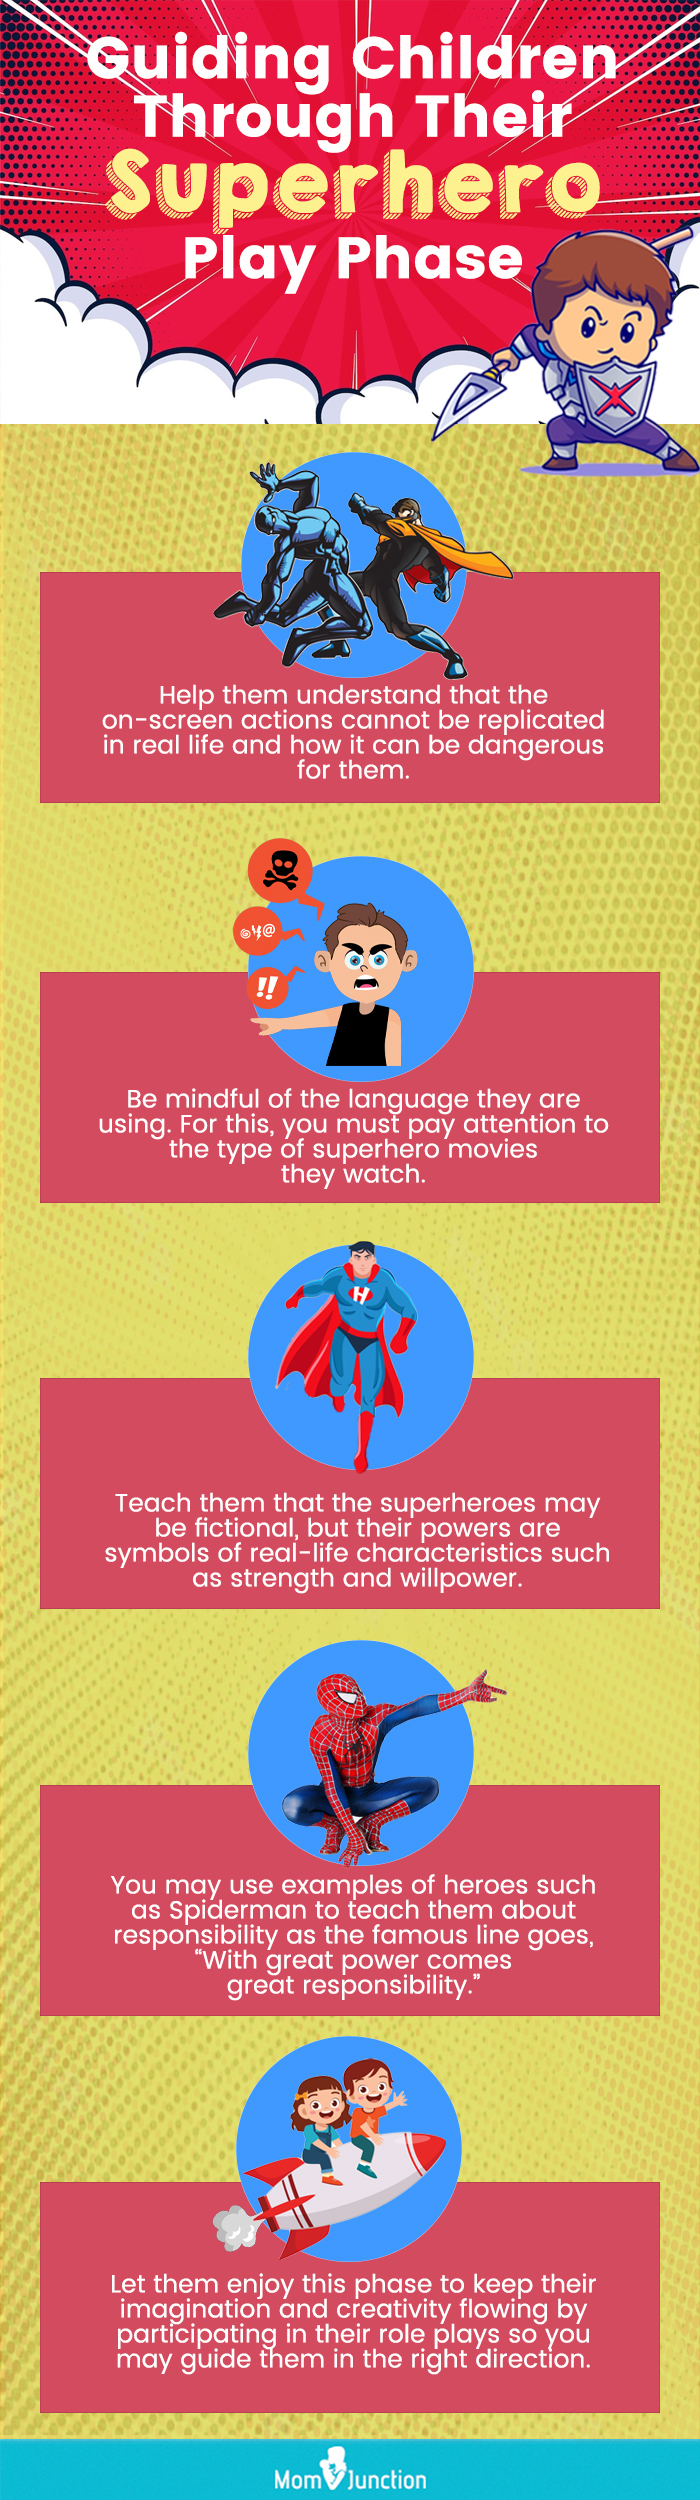 guiding children through their superhero play phase (infographic)